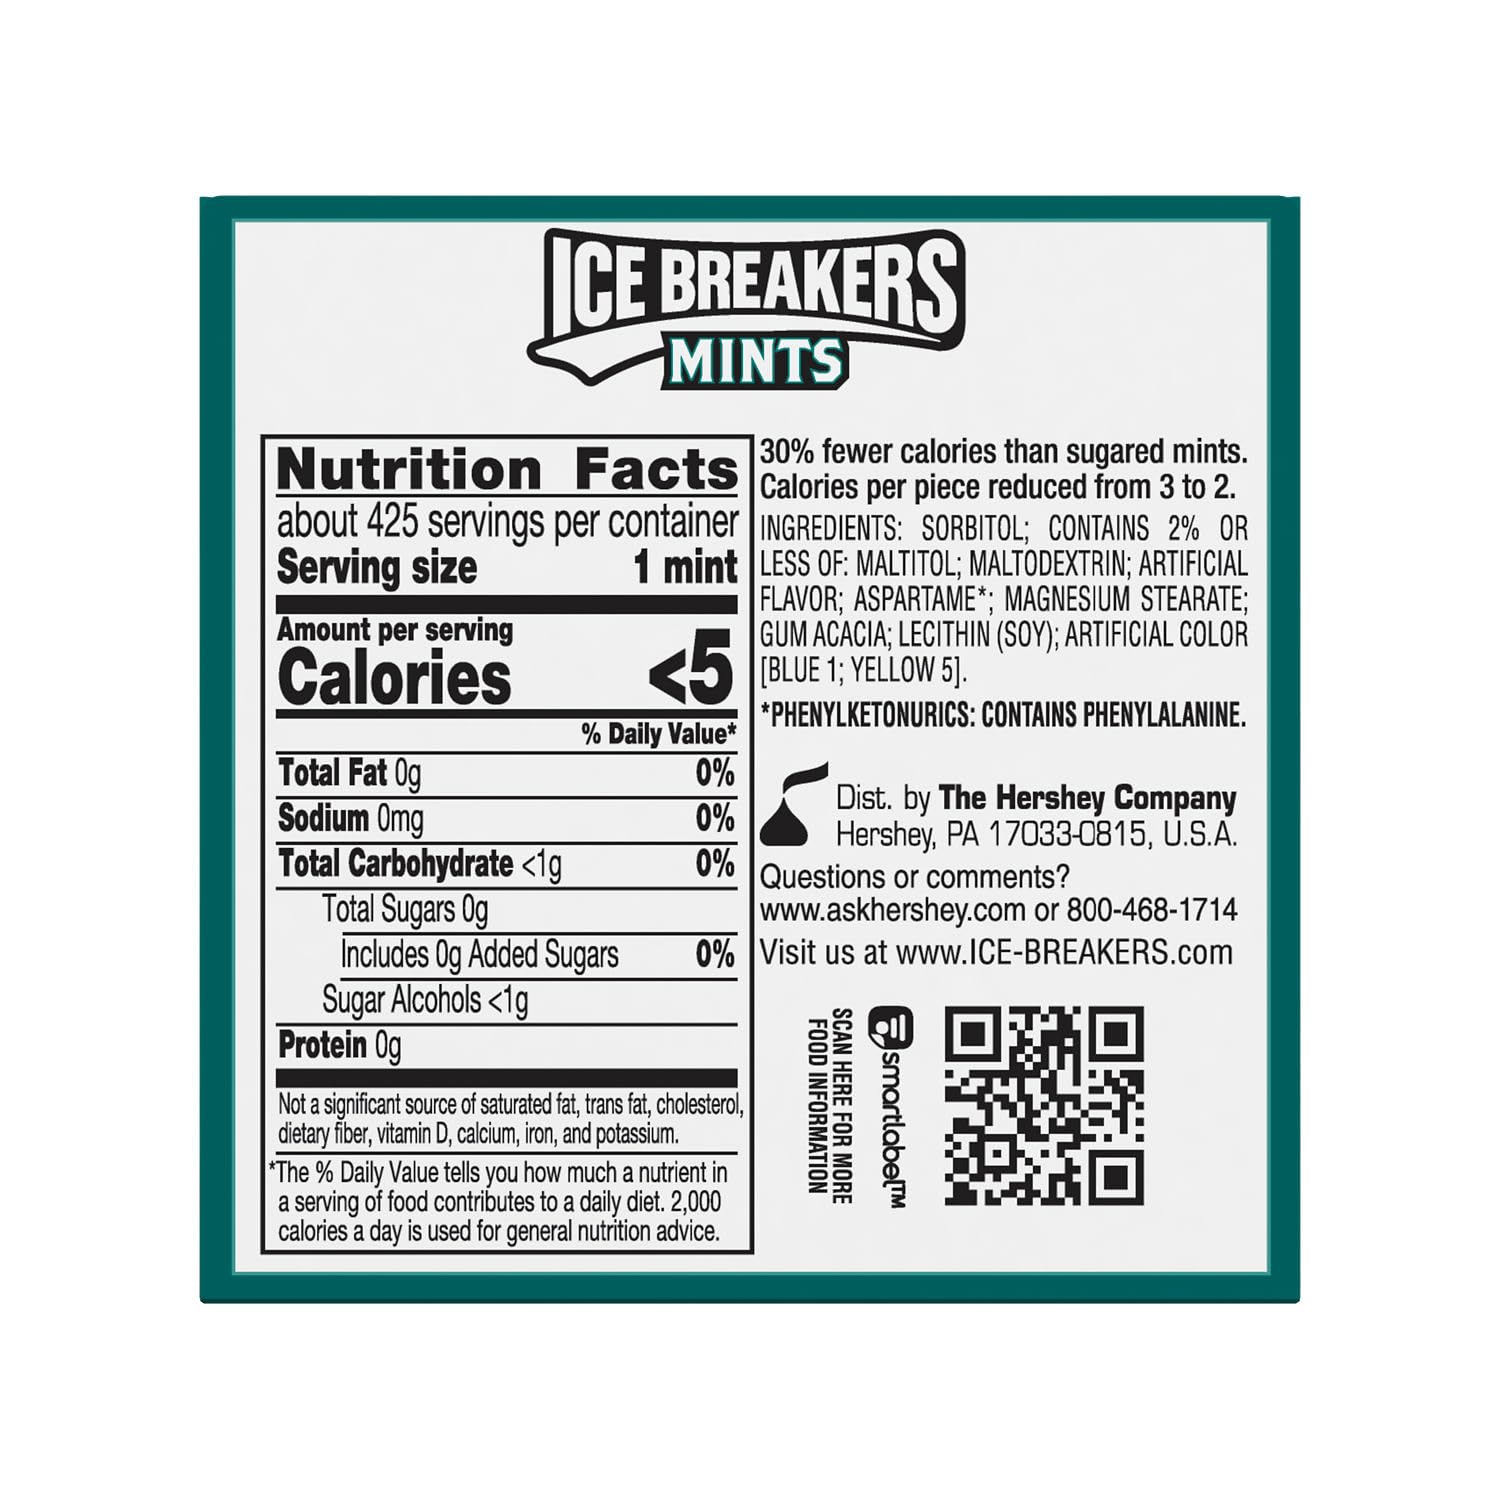 ICE BREAKERS Wintergreen Sugar Free Breath Mints Tins, 1.5 oz (8 Count)